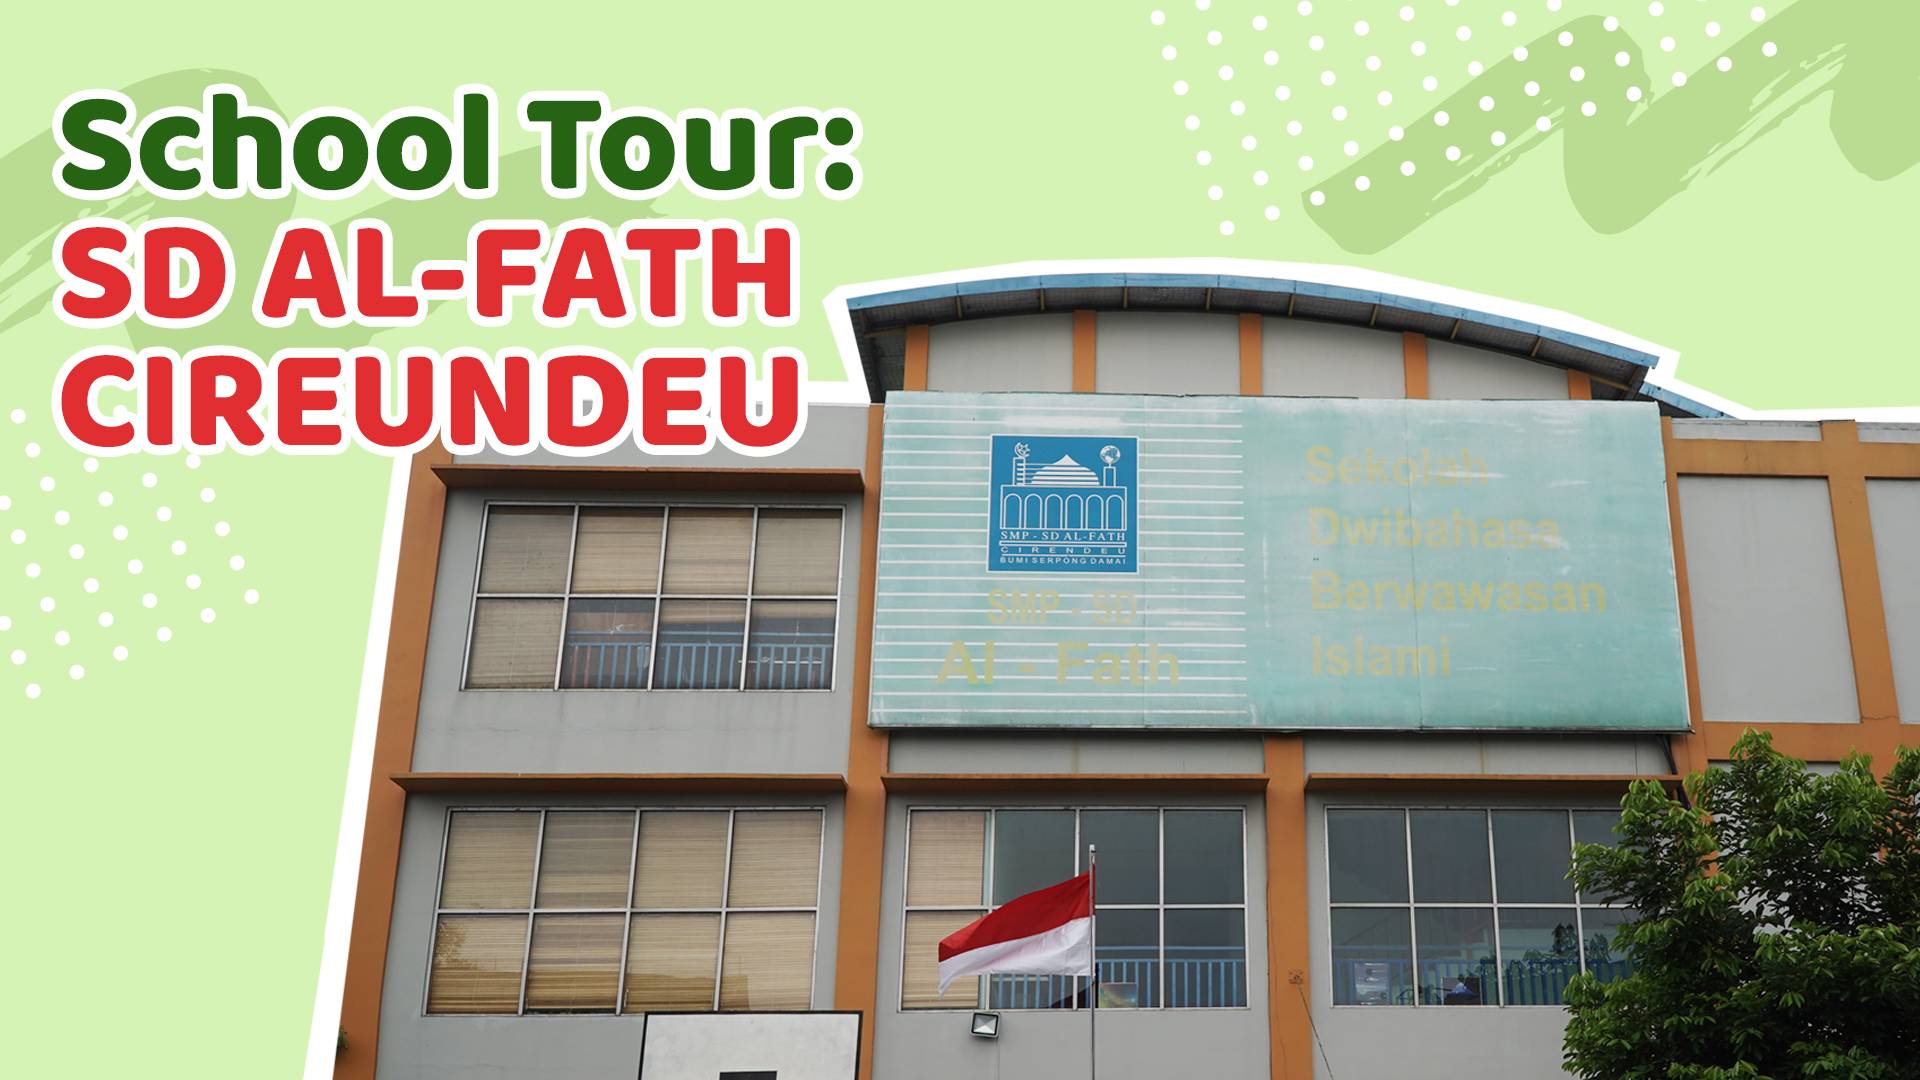 School Tour: SD Al-Fath Cireundeu